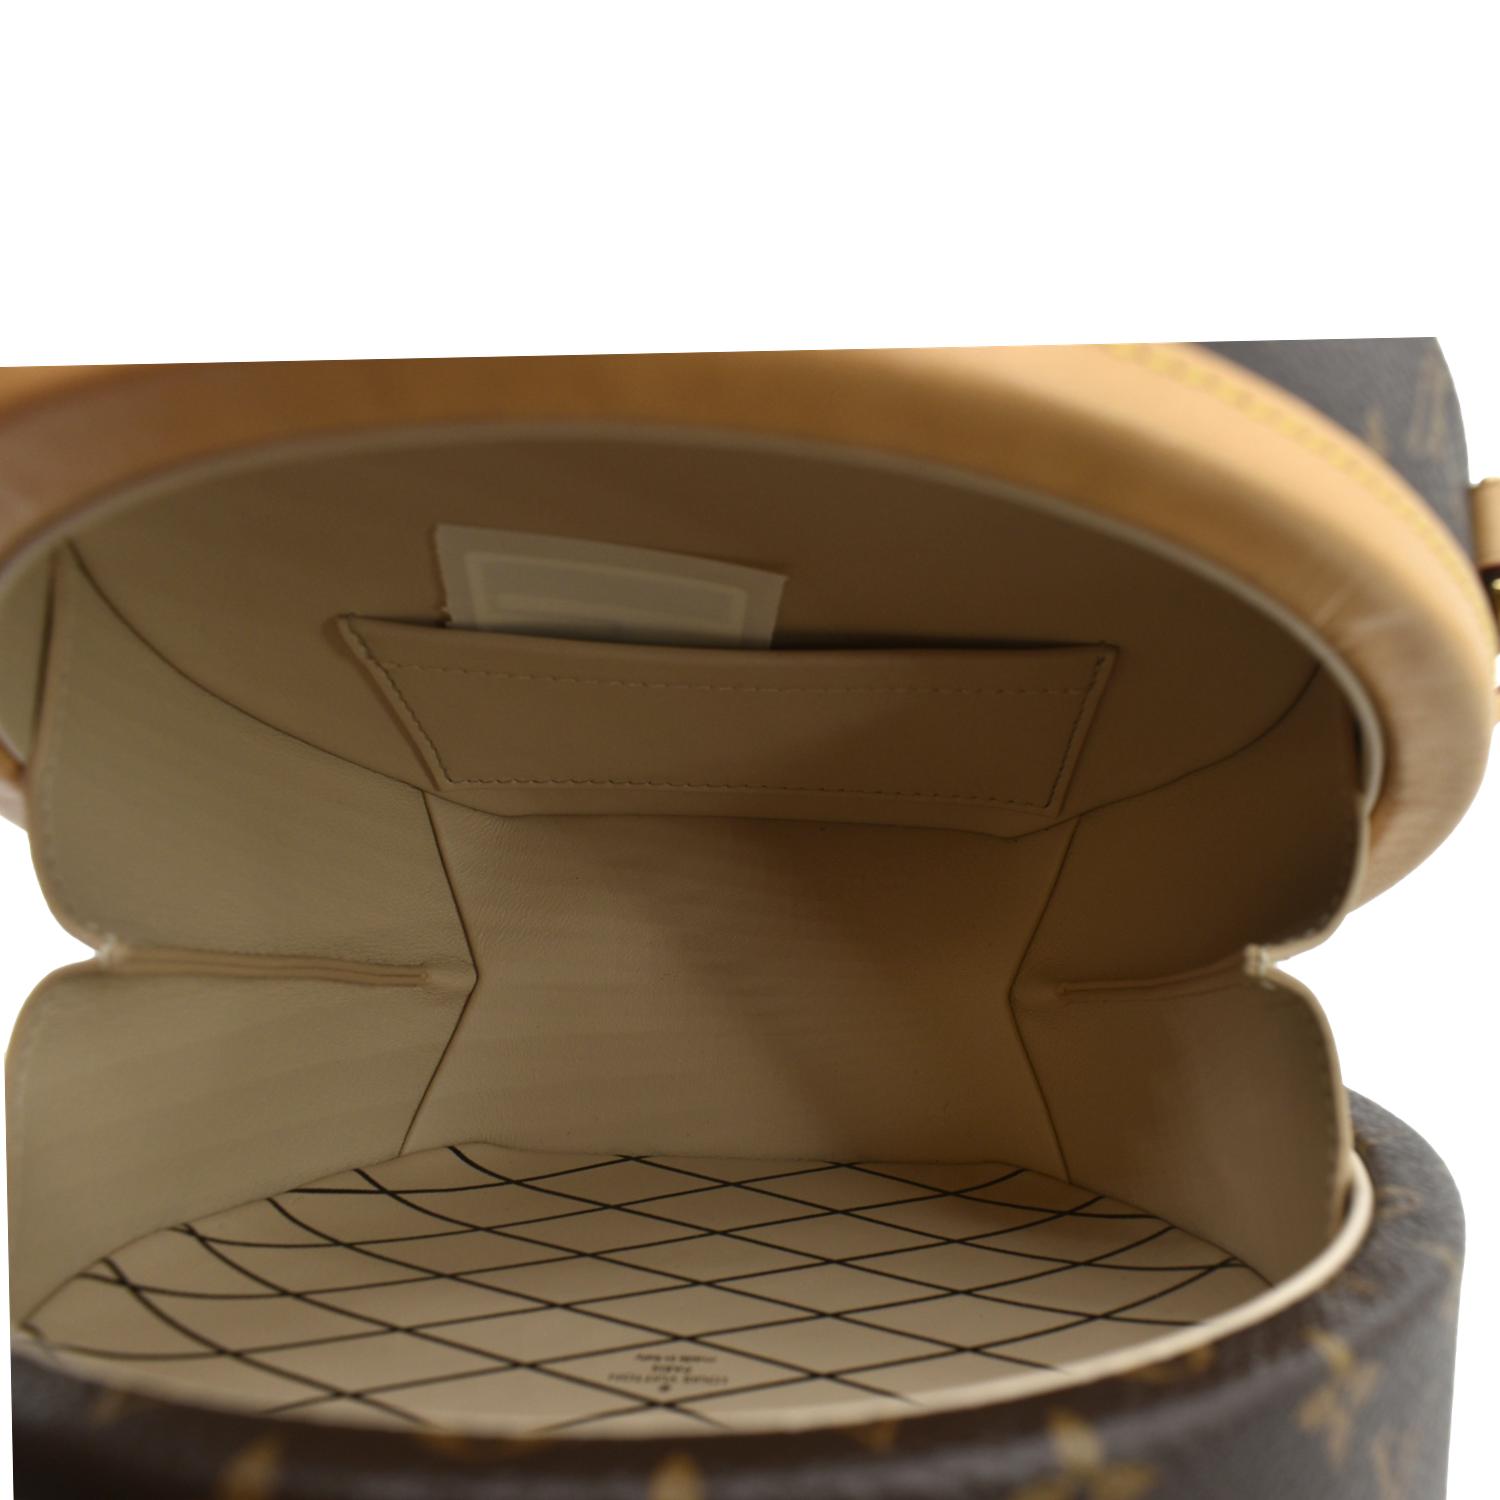 Petite Boite Chapeau Bag - Luxury Monogram Canvas Brown